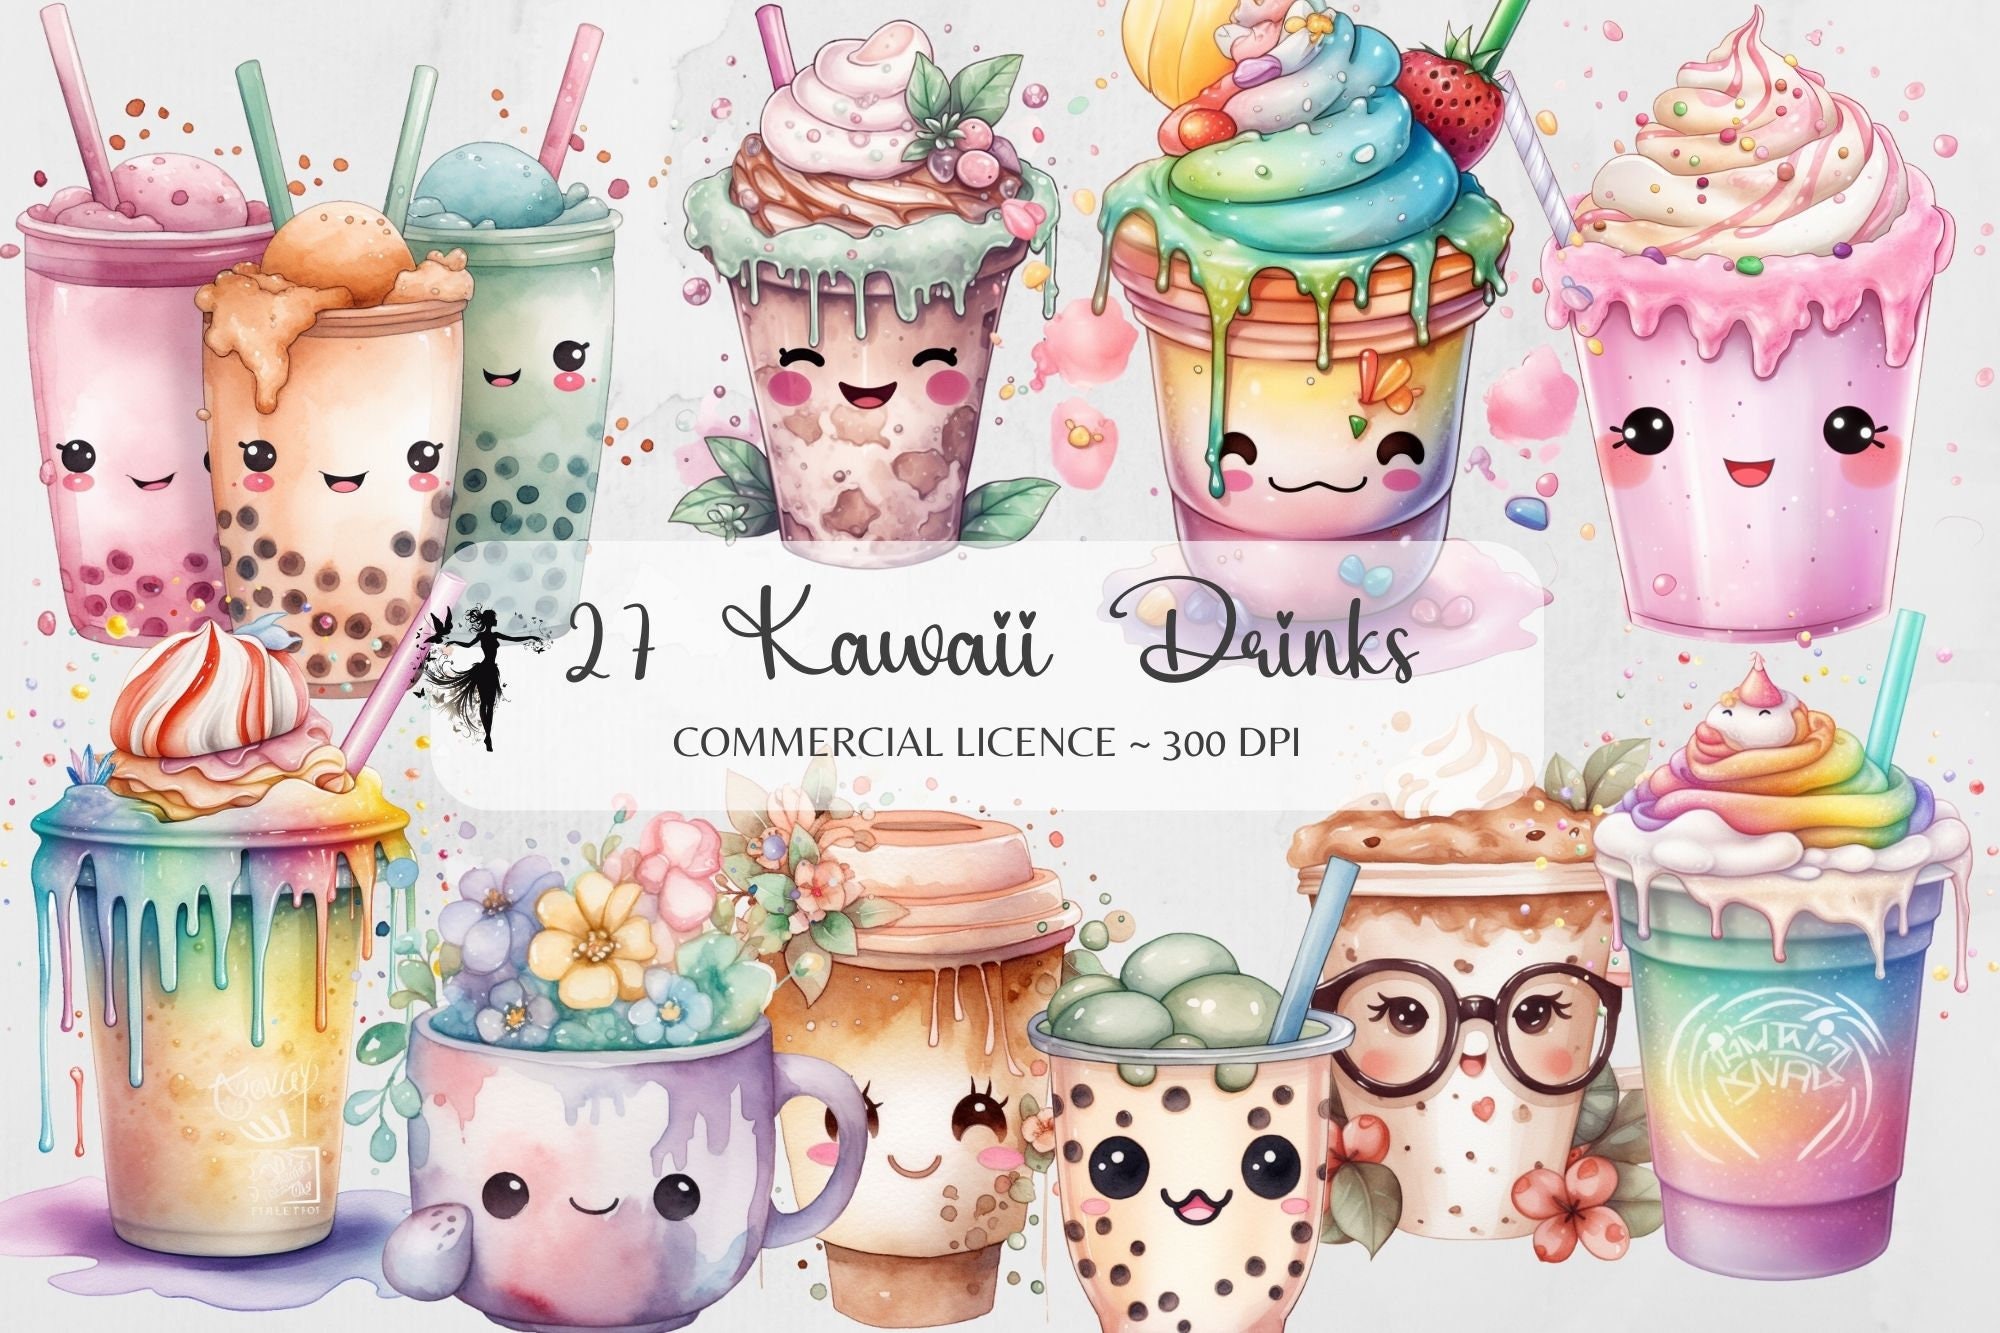 Kawaii Cute Drink Cup Chocolate Graphic by Soe Image · Creative Fabrica